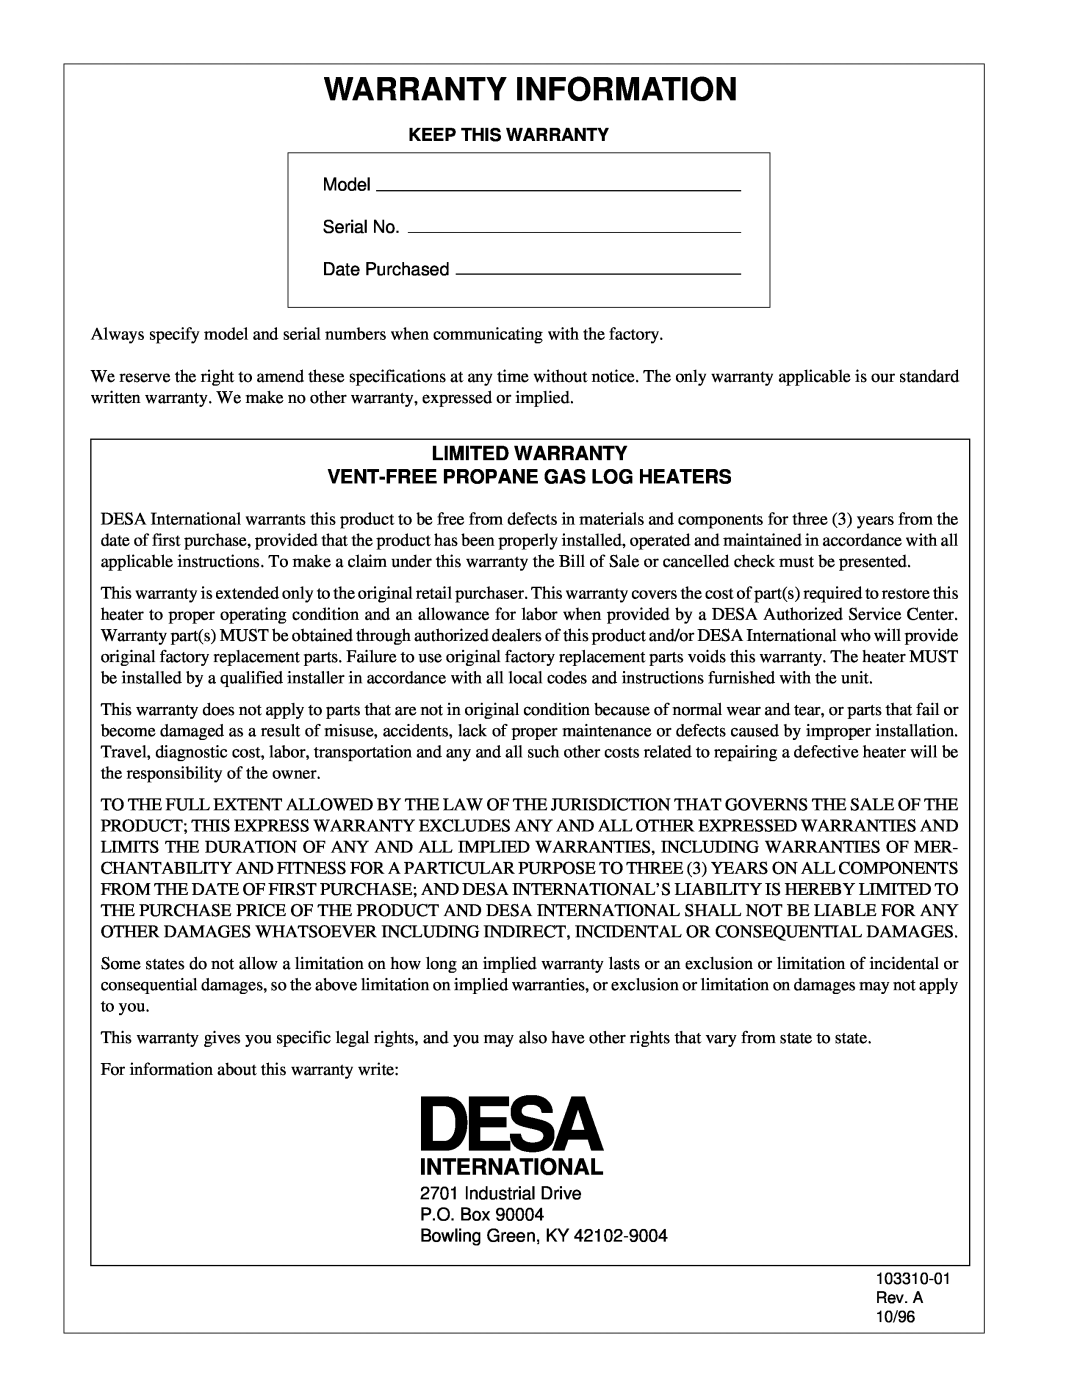 Desa UNVENTED (VENT-FREE) PROPANE/LPGAS LOG HEATER Warranty Information, Limited Warranty Vent-Freepropane Gas Log Heaters 